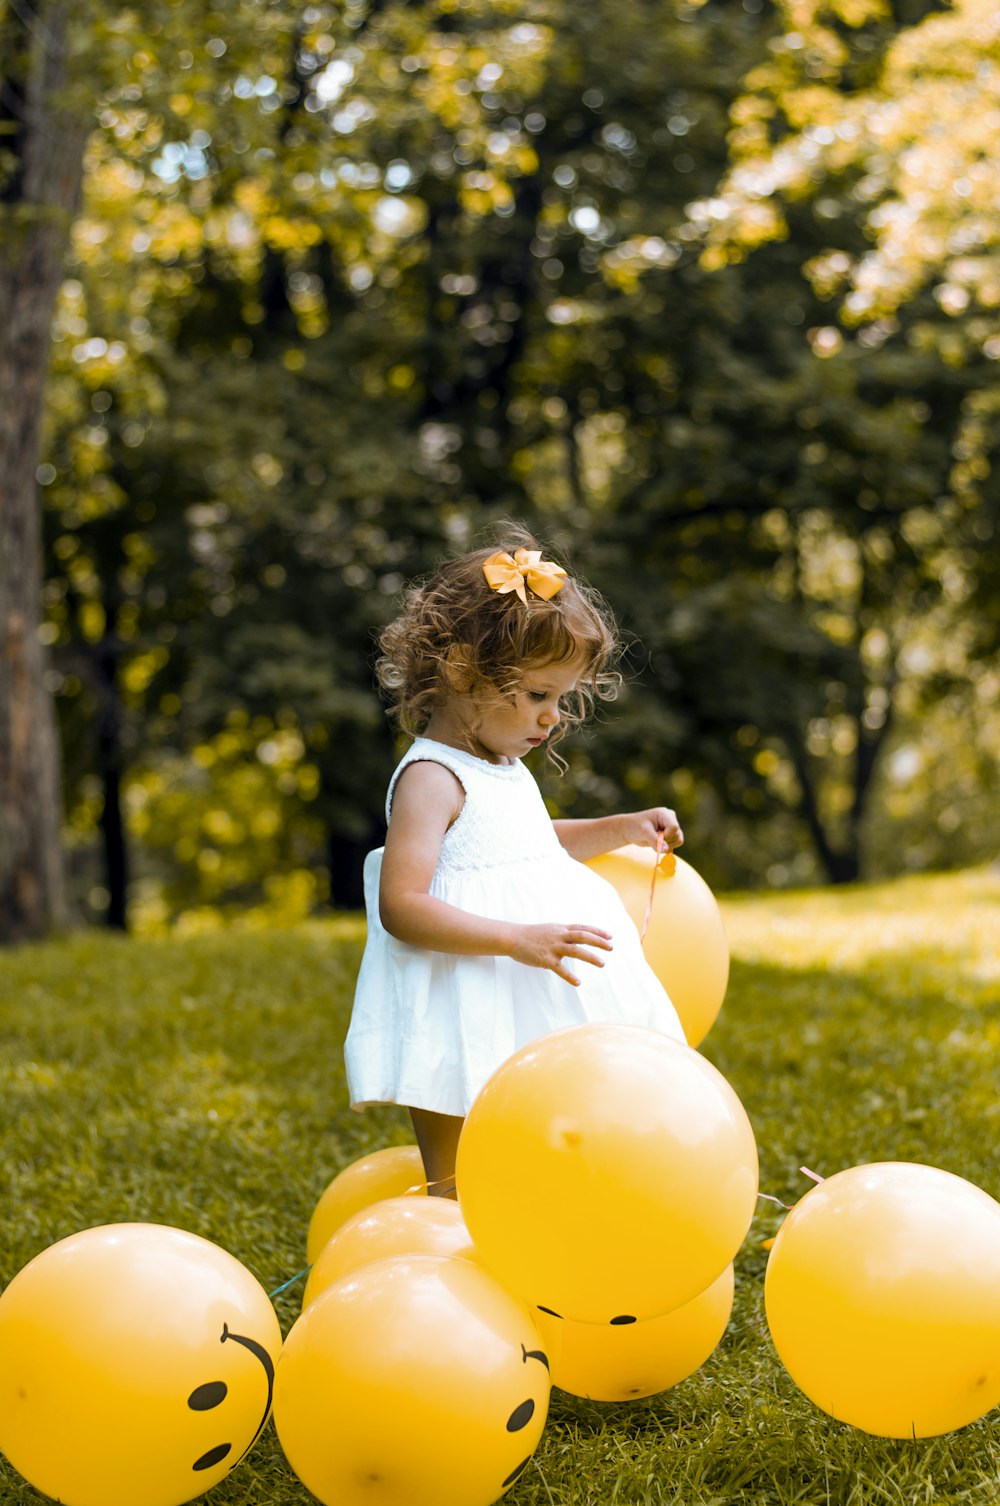 Mädchen trägt weißes ärmelloses Kleid neben Luftballons